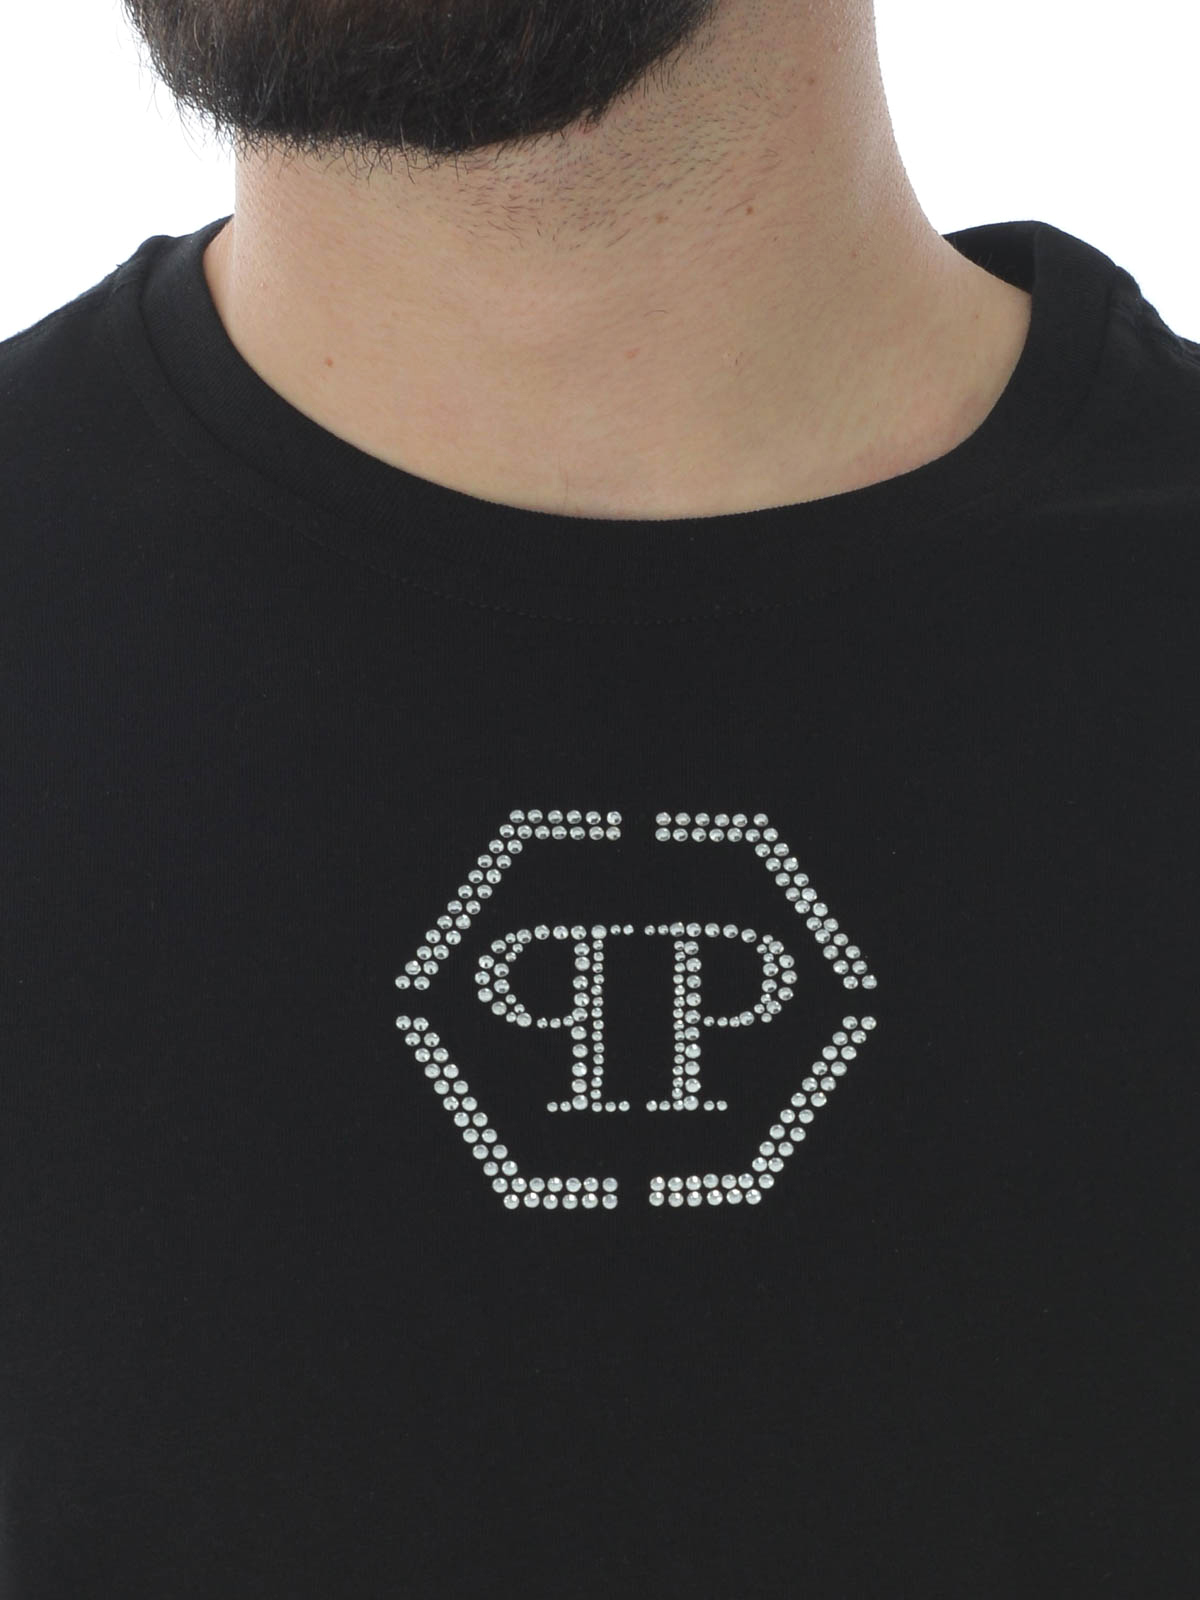 philipp plein t shirt crystal